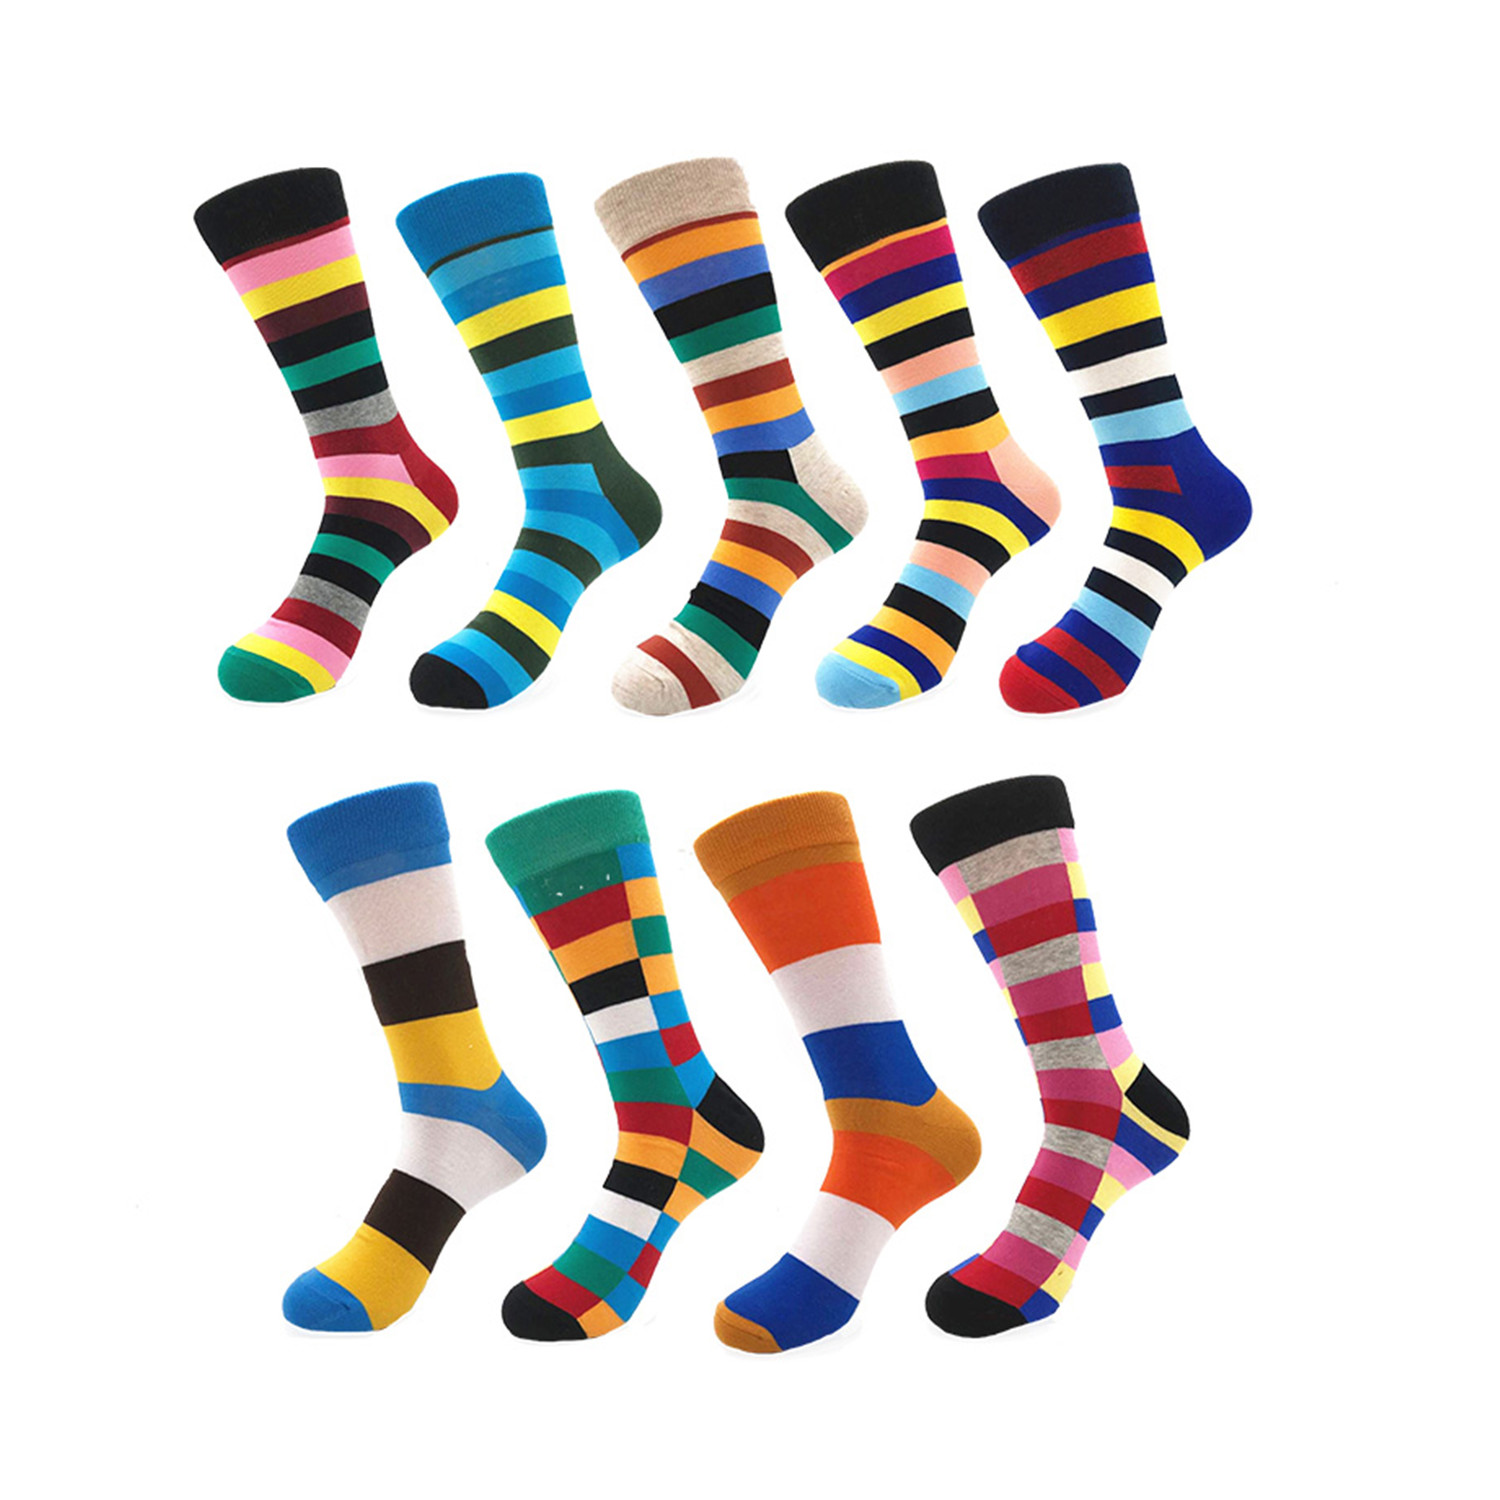 Assorted Soft Cotton Socks Bundle 22 // Multicolor // Pack of 9 ...